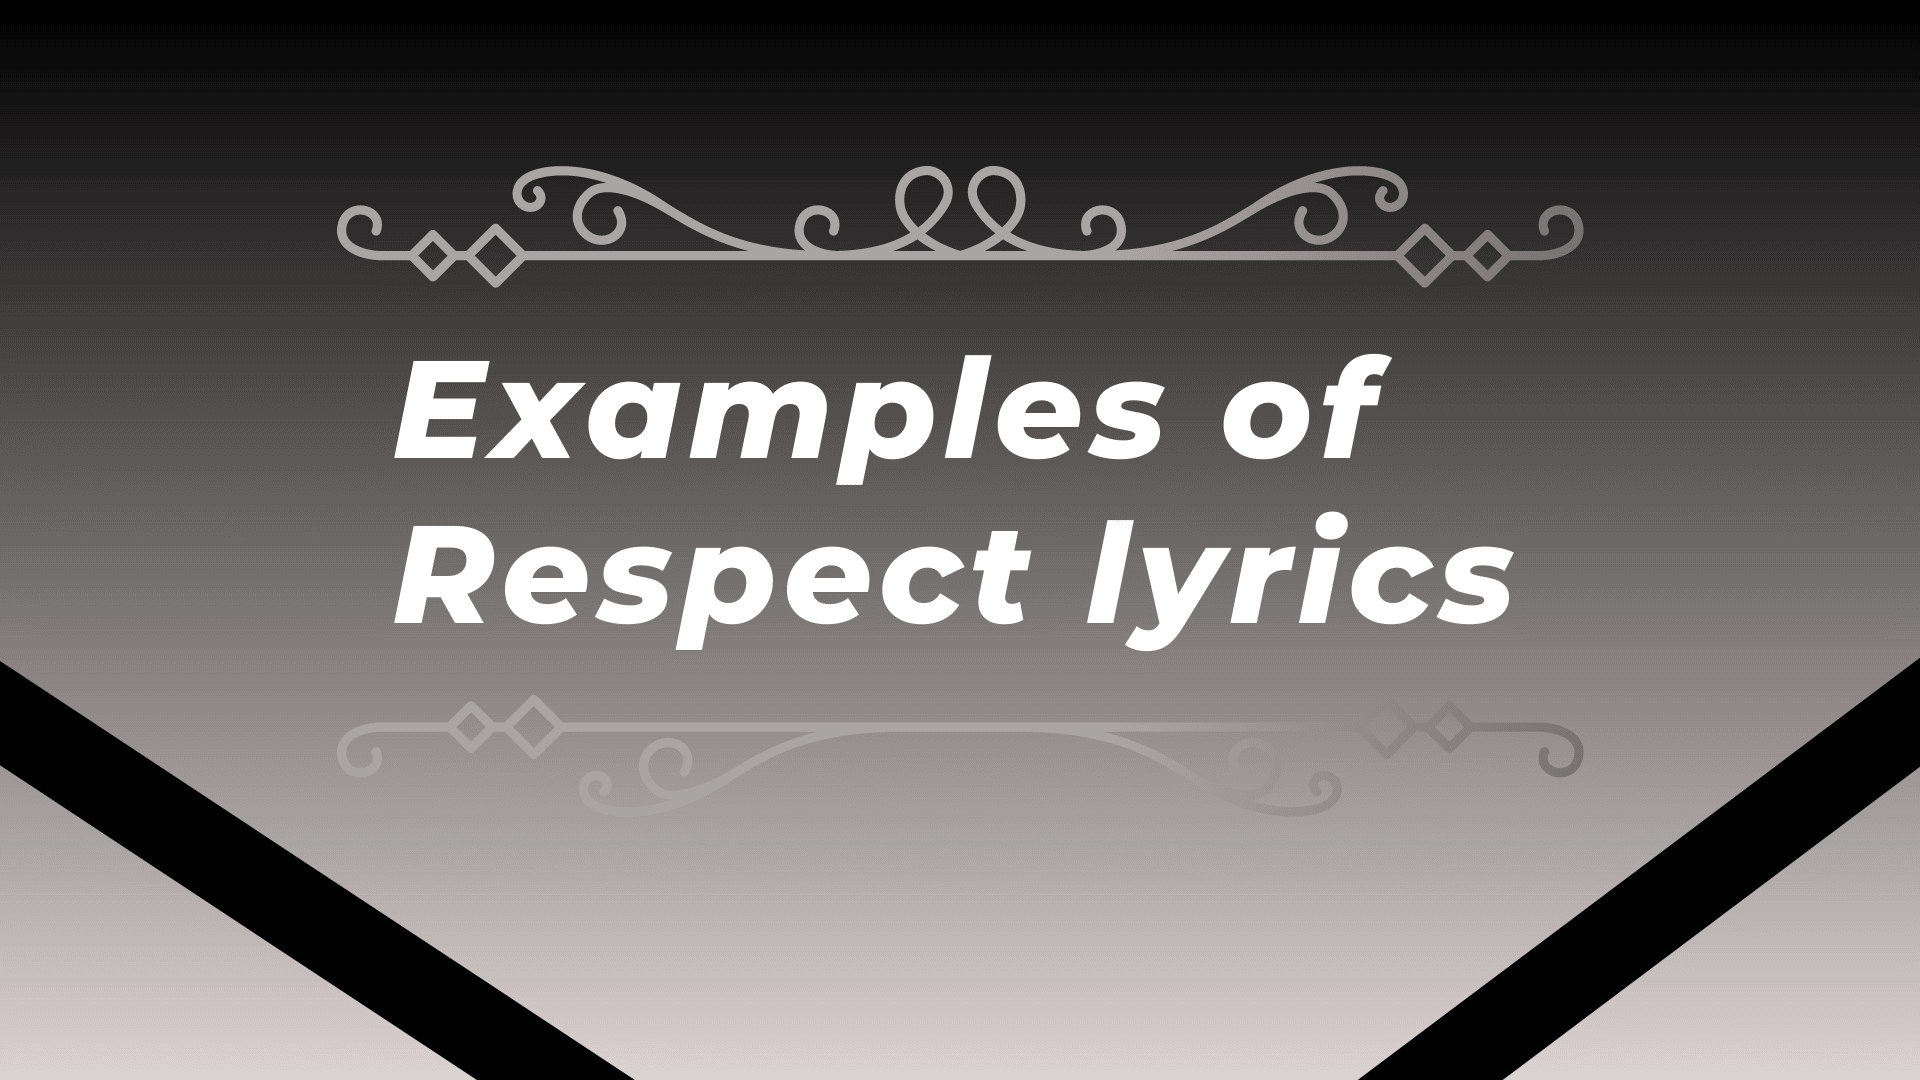 Respect Lyrics: True meaning of Respect Lyrics